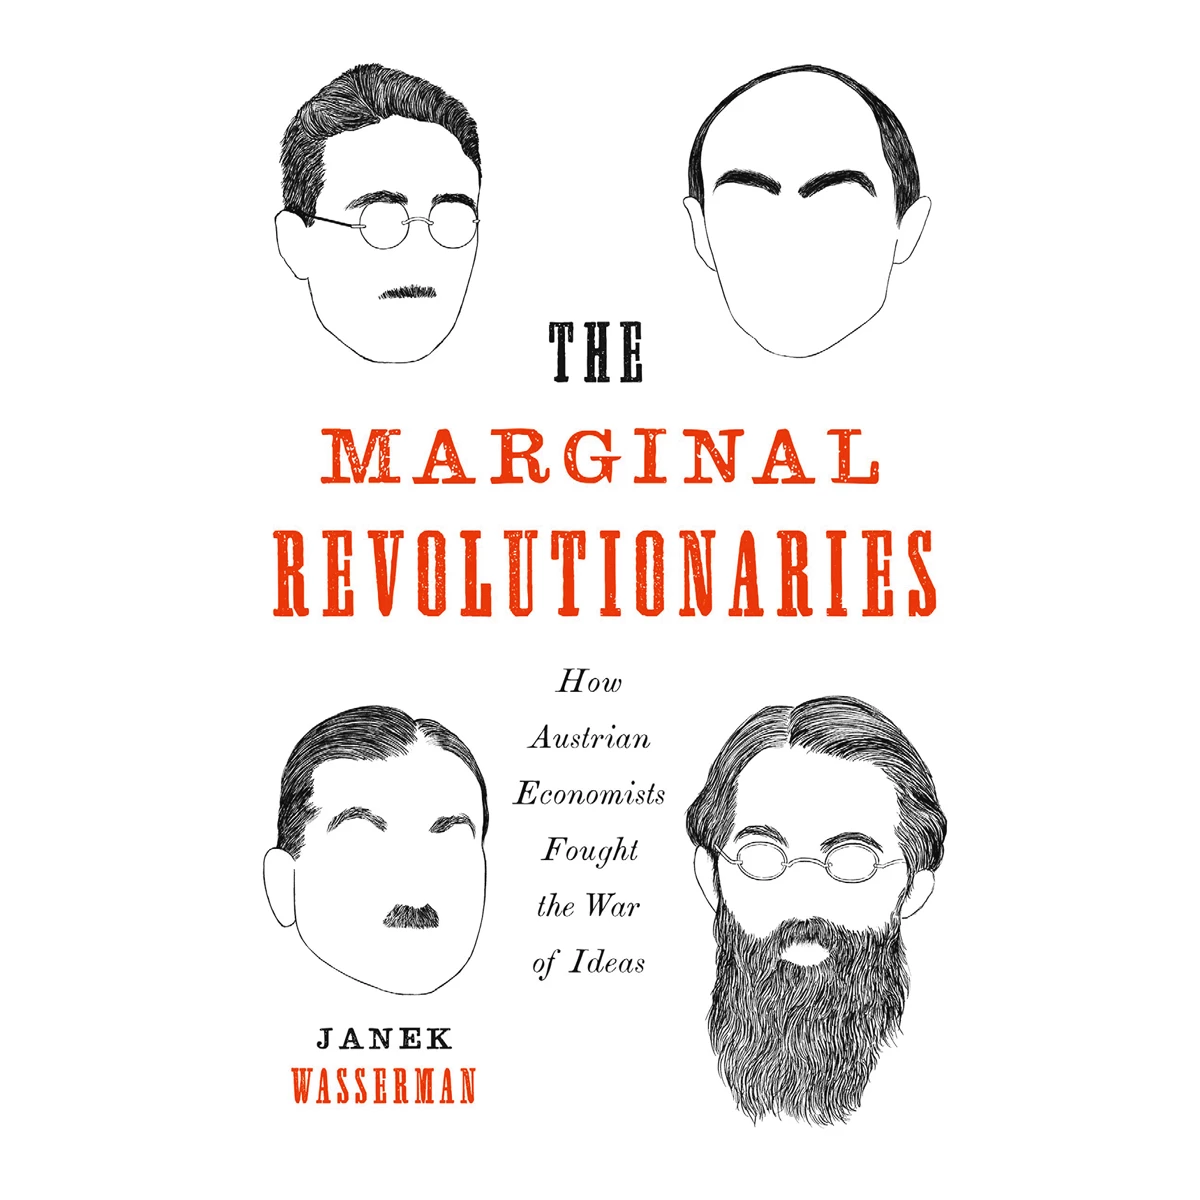 The Marginal Revolutionaries